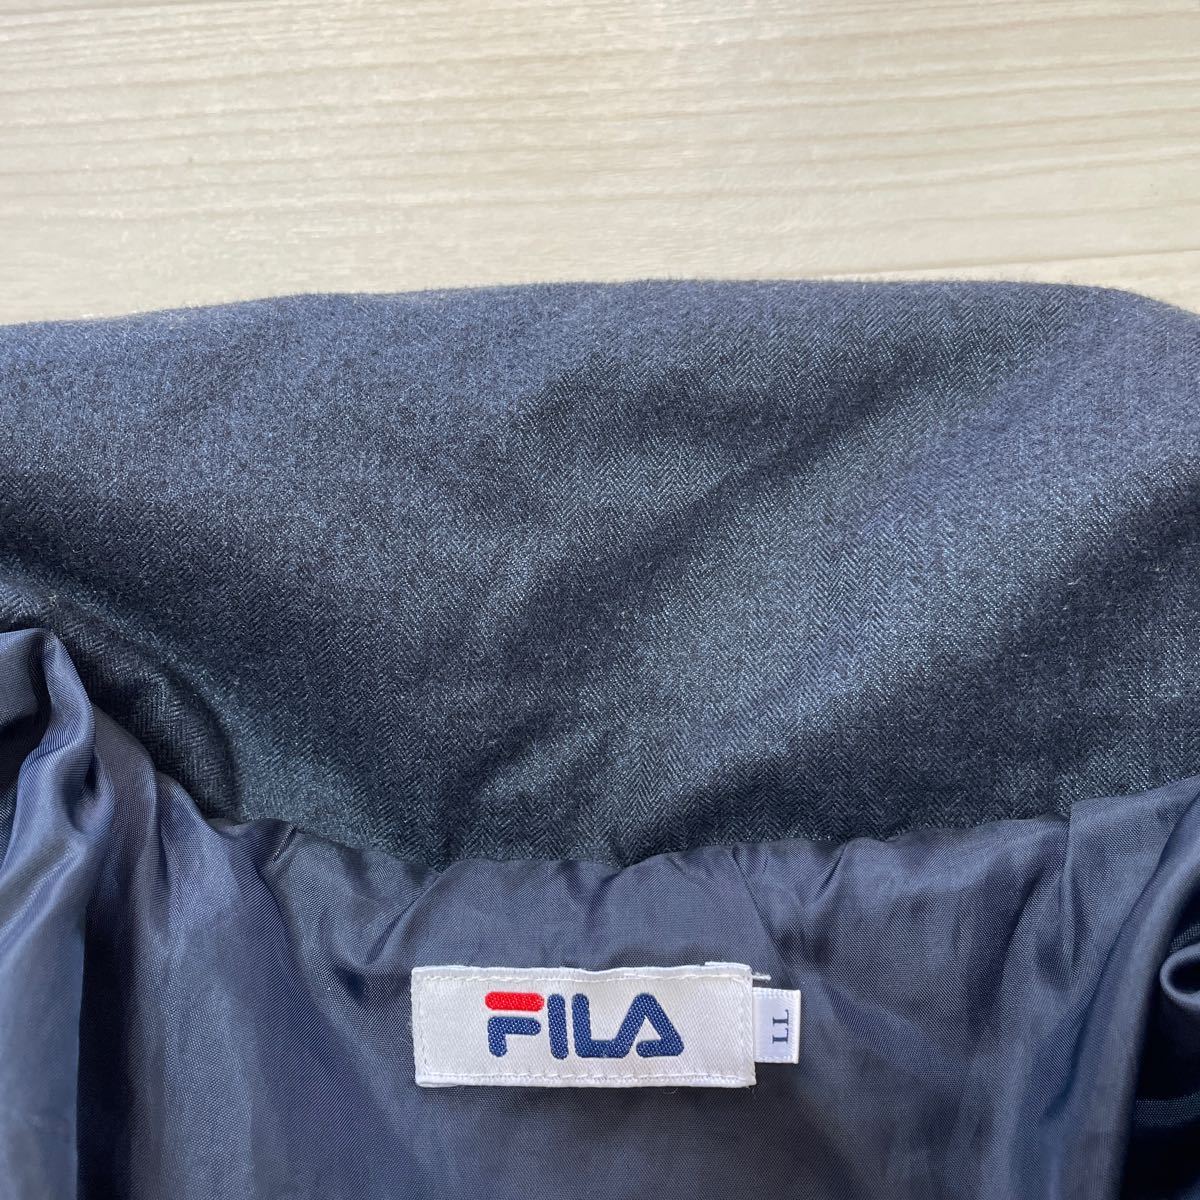 FILA filler cotton inside coat sport wear protection against cold navy Golf wear lady's size LL